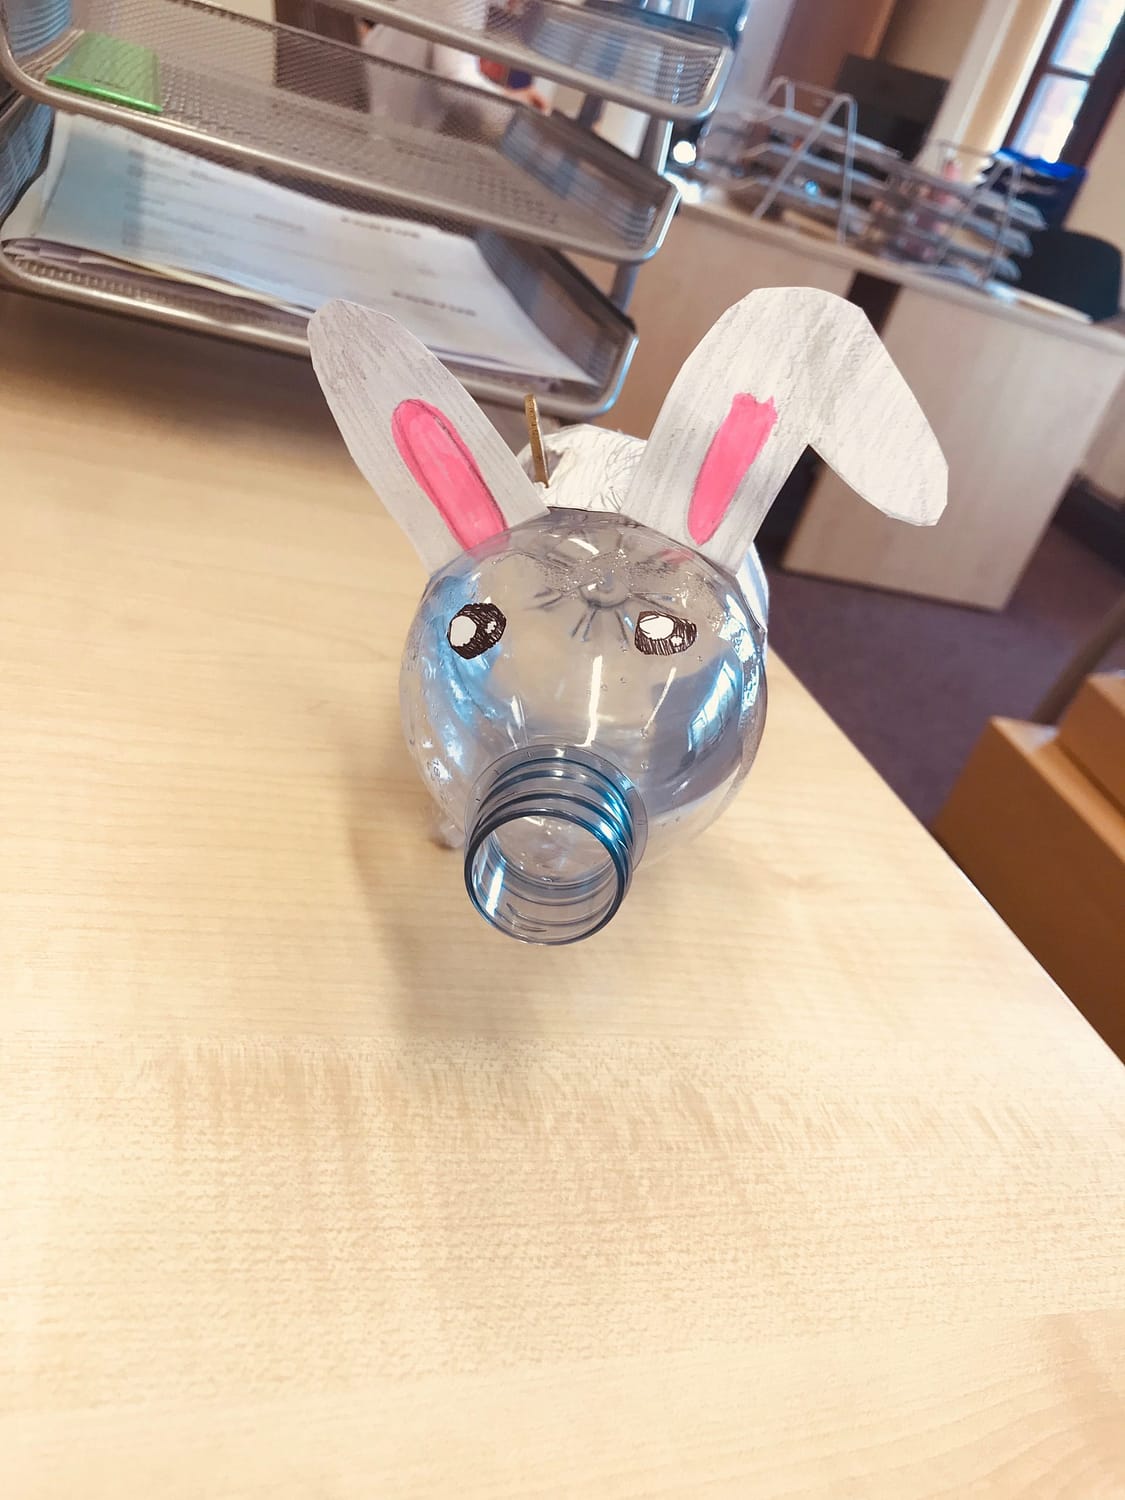 Plastic bottle turned into a rabbit piggy bank!